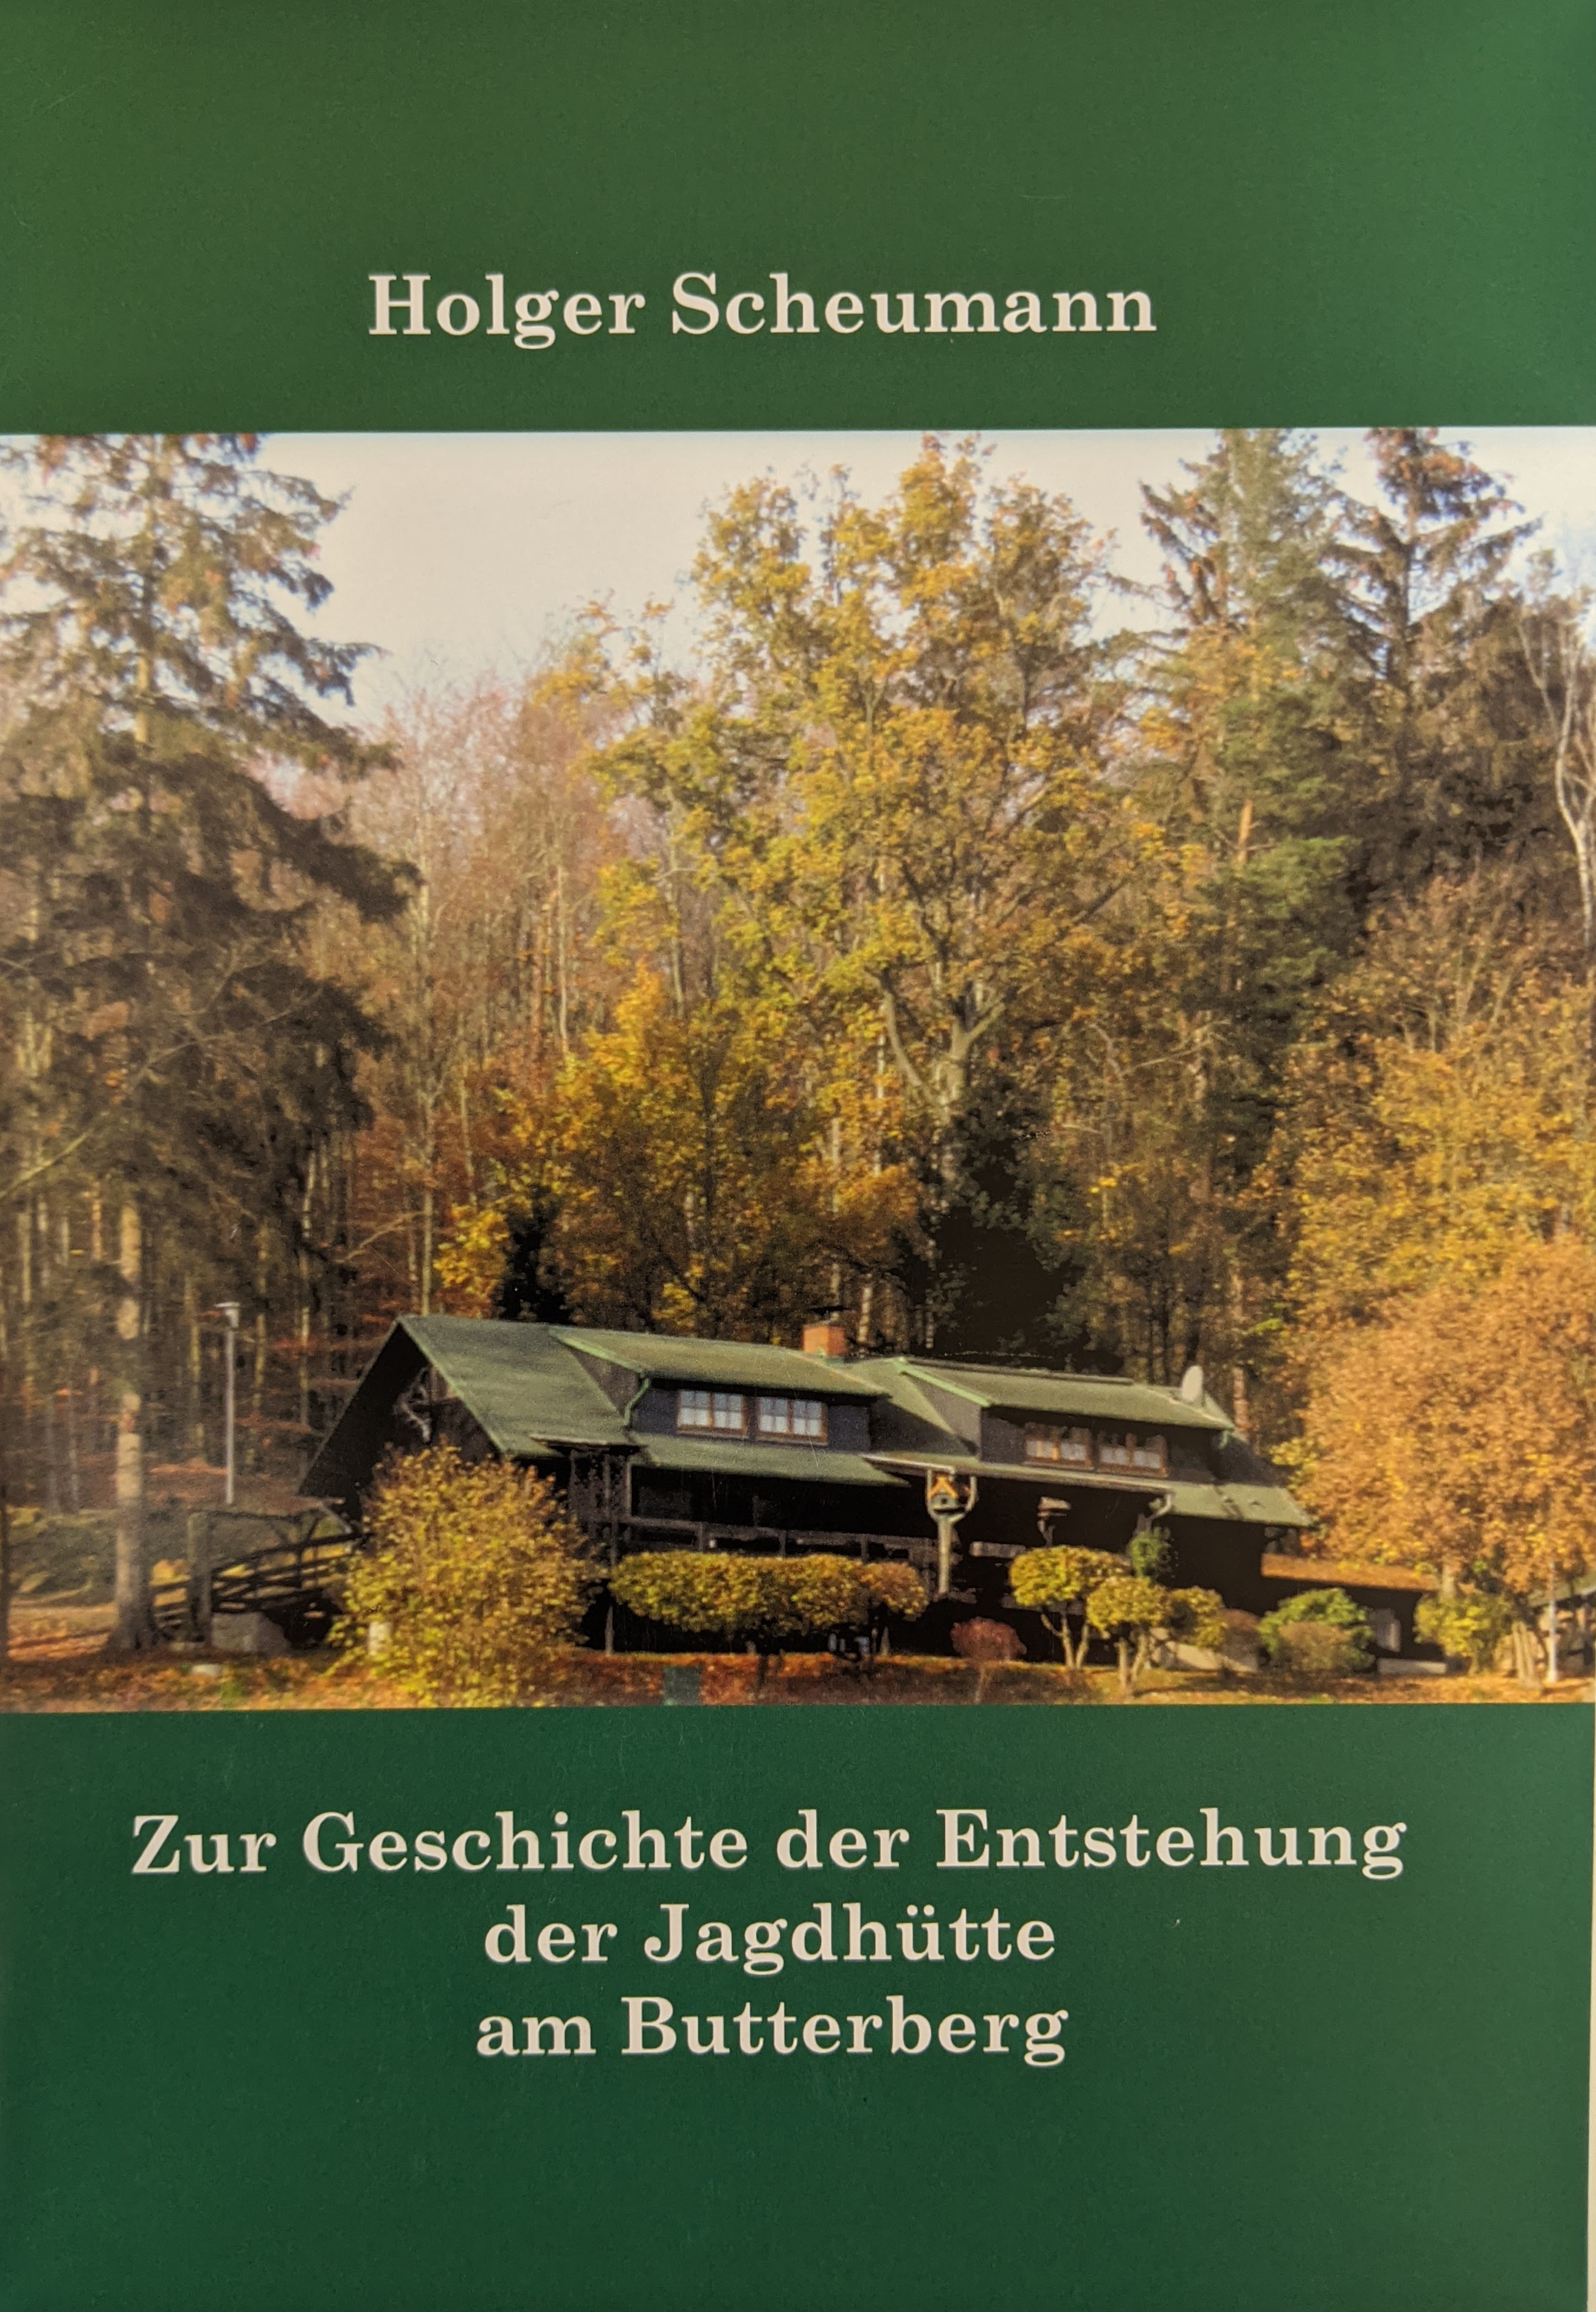 Zur Geschichte der Entstehung der Jagdhütte am Butterberg 